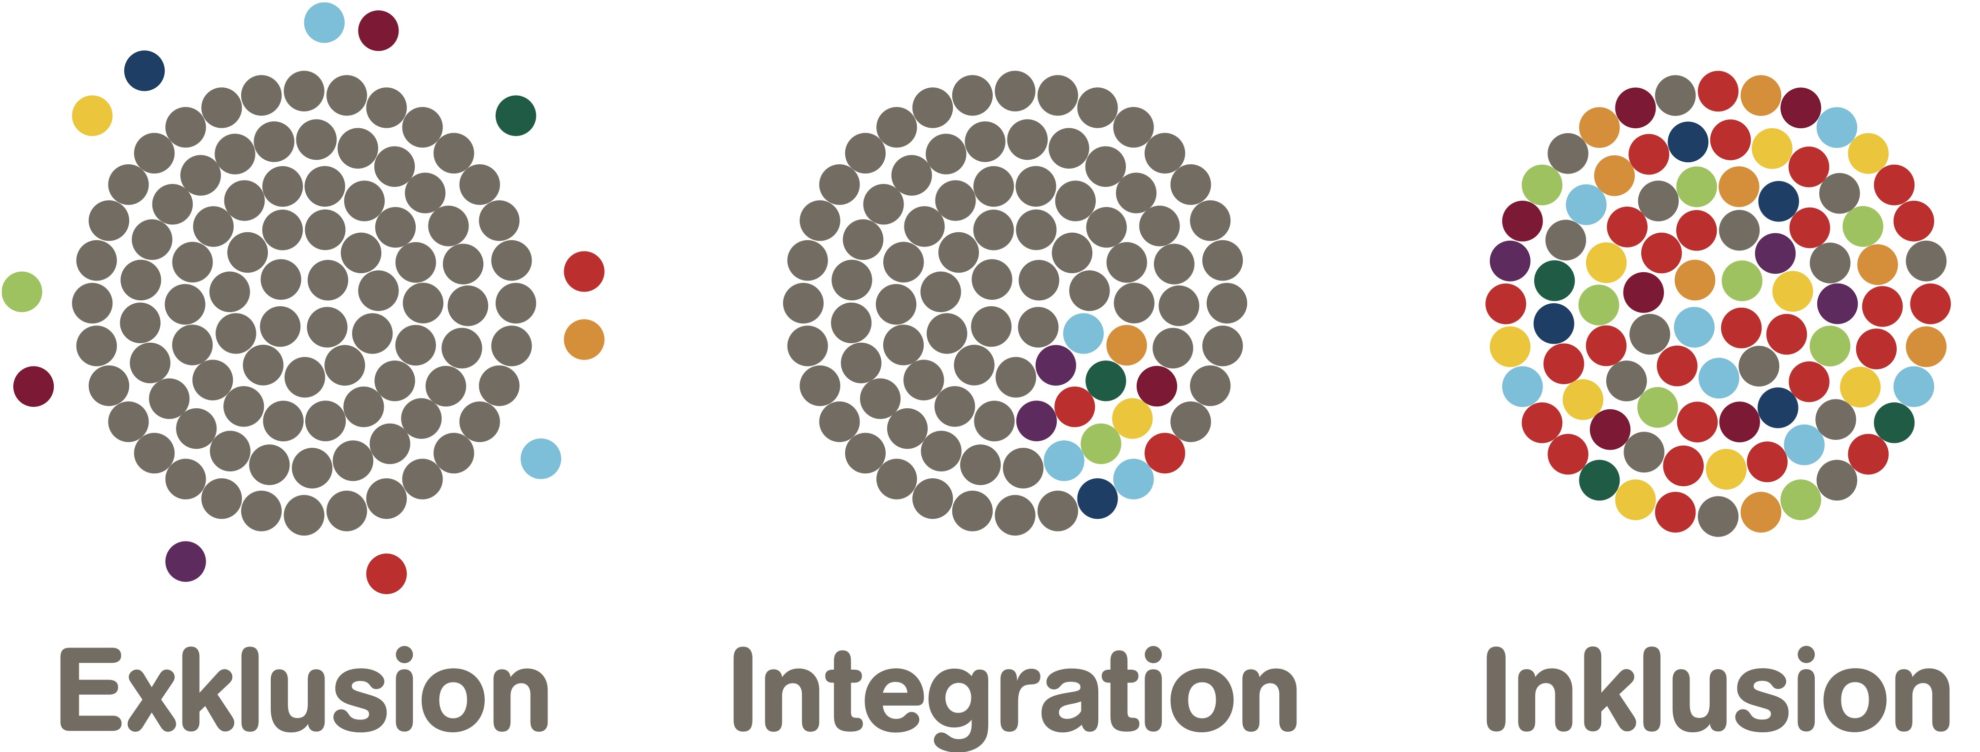 Inklusion - Integration - Exklusion - Grafik